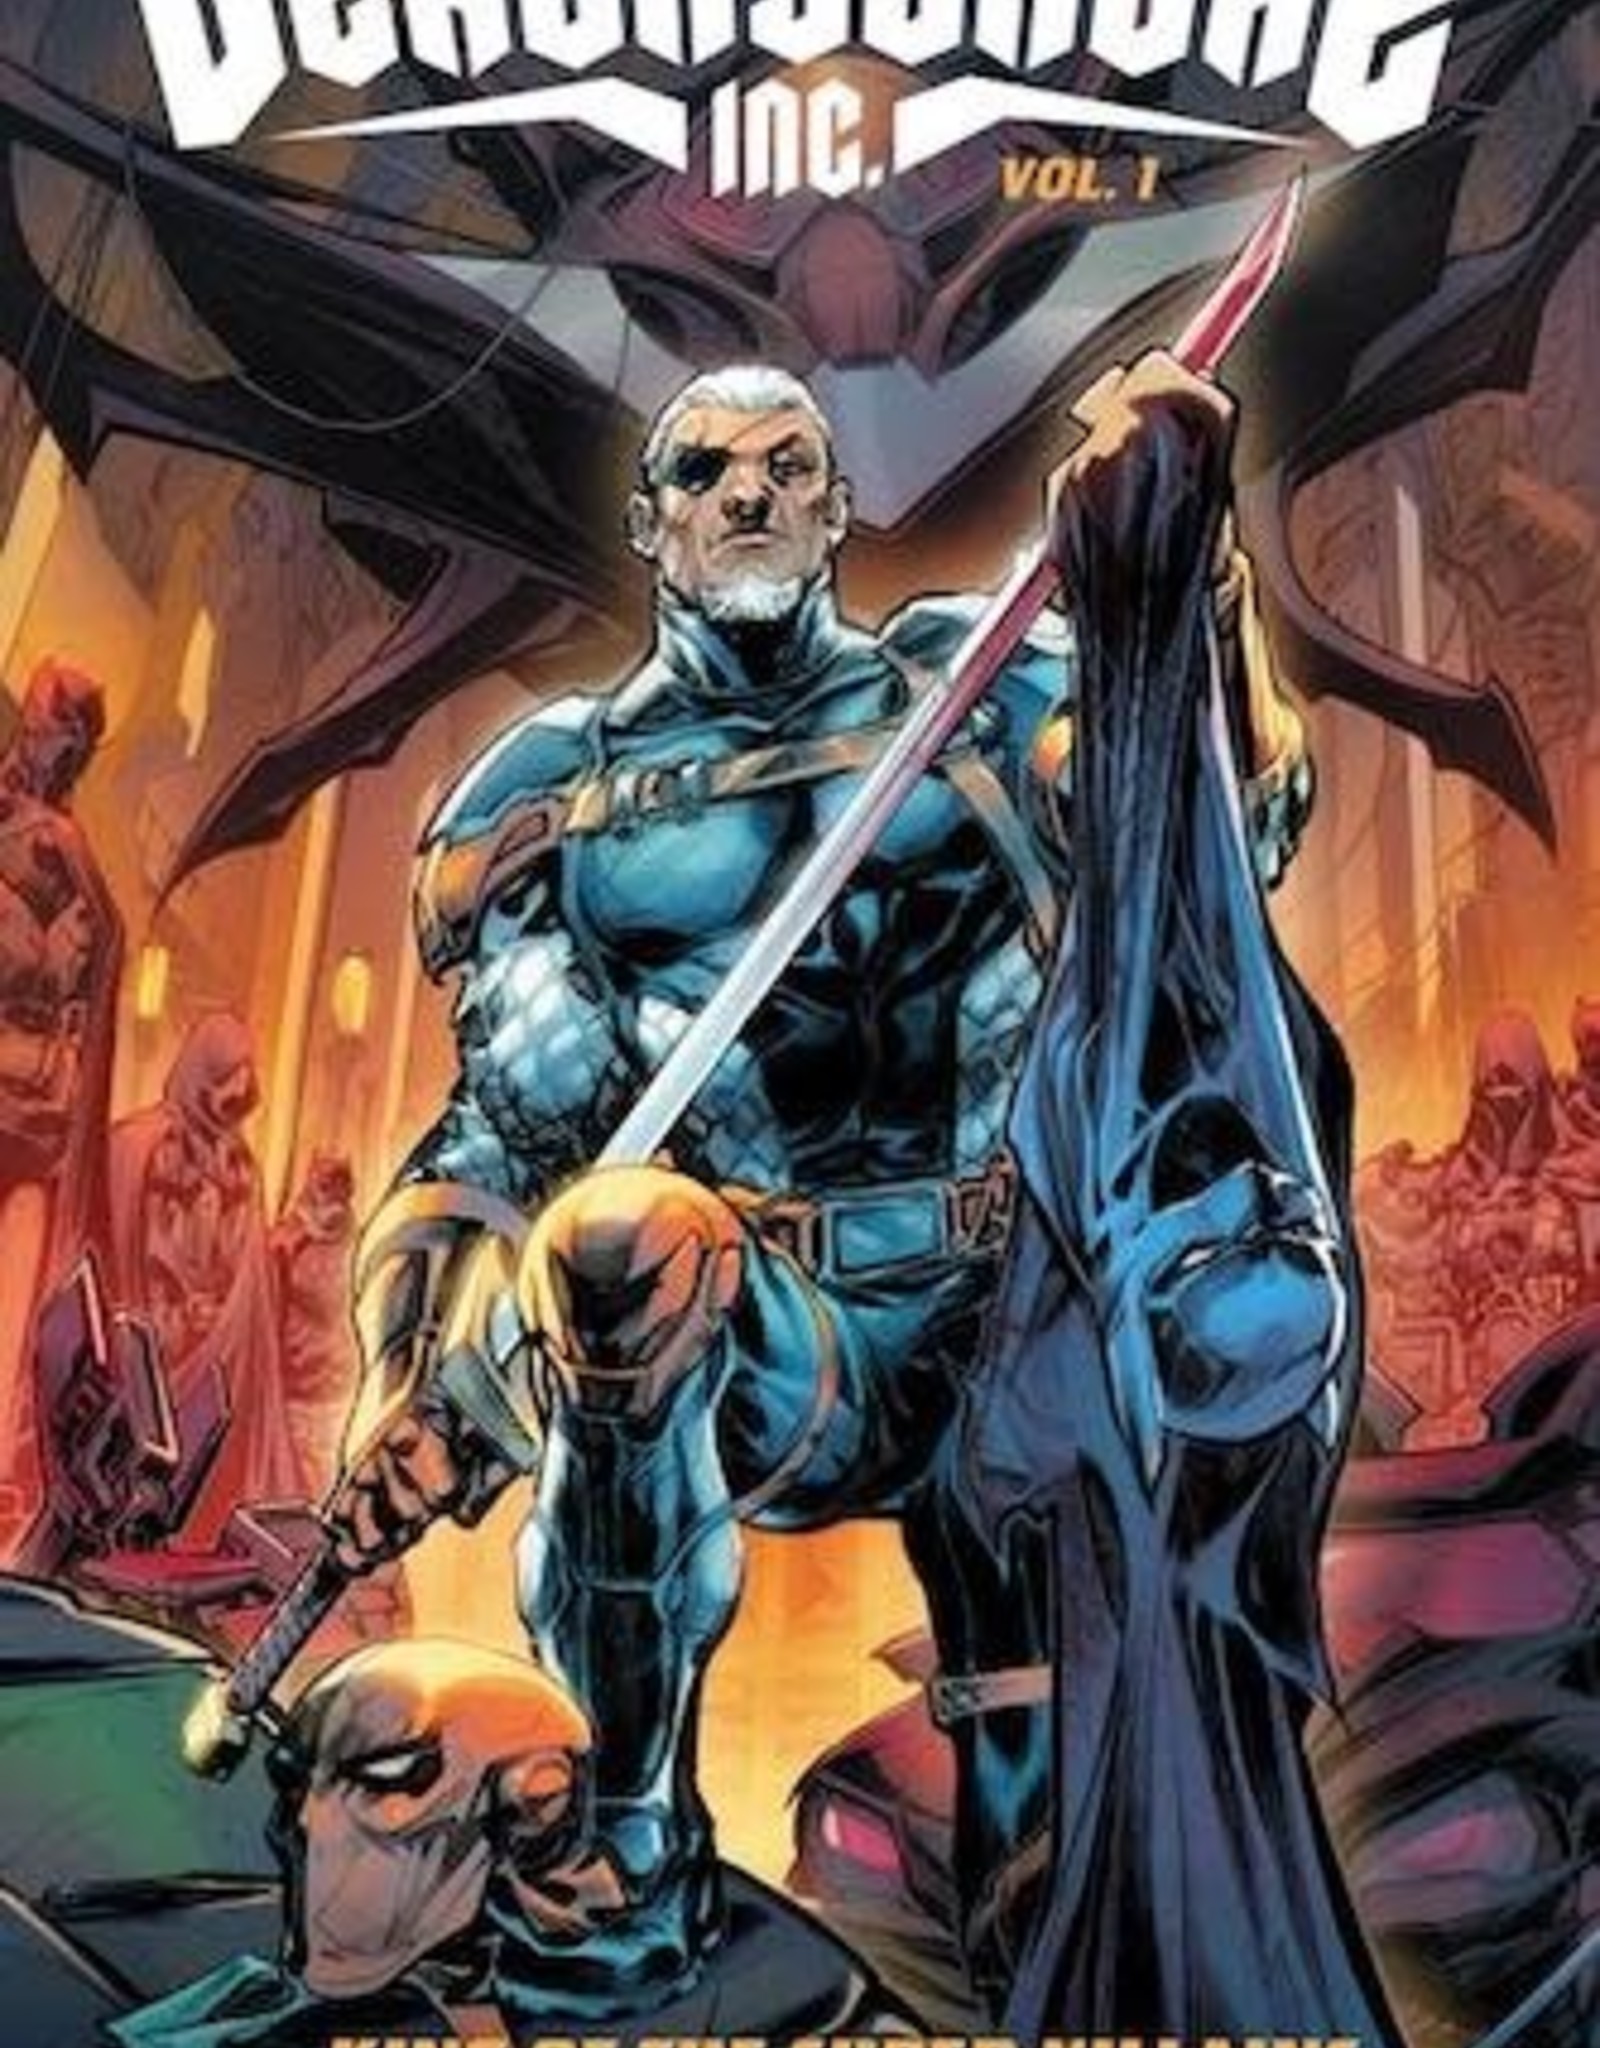 DC Comics Deathstroke Inc HC Vol 01 King Of The Super-Villains